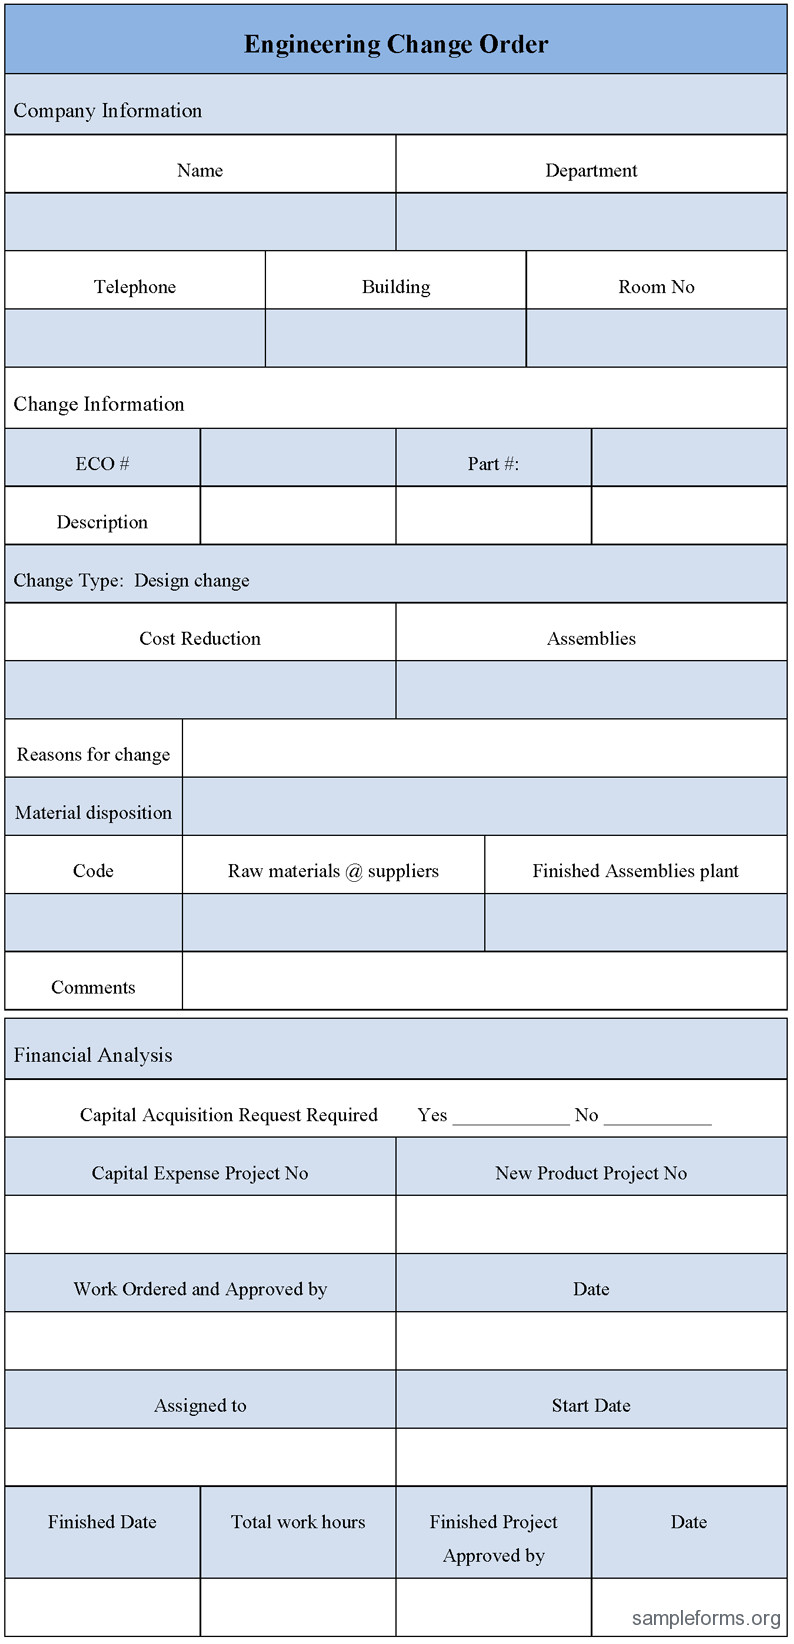 Engineering Change Order Form Sample Forms